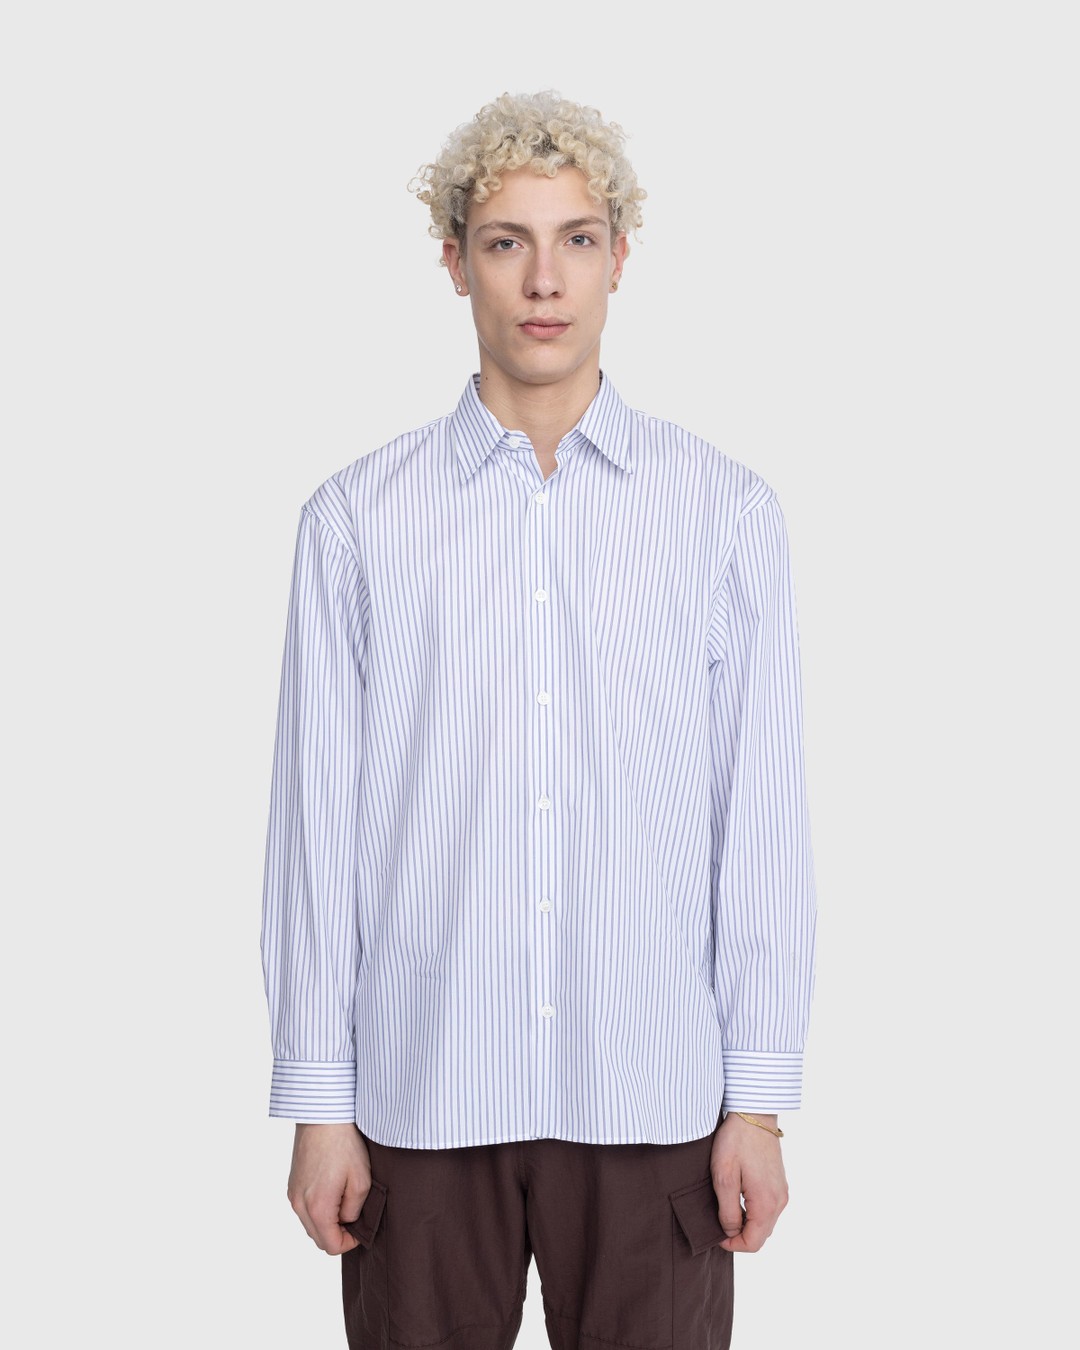 Dries van Noten – Croom Shirt Striped White - Longsleeve Shirts - White - Image 2